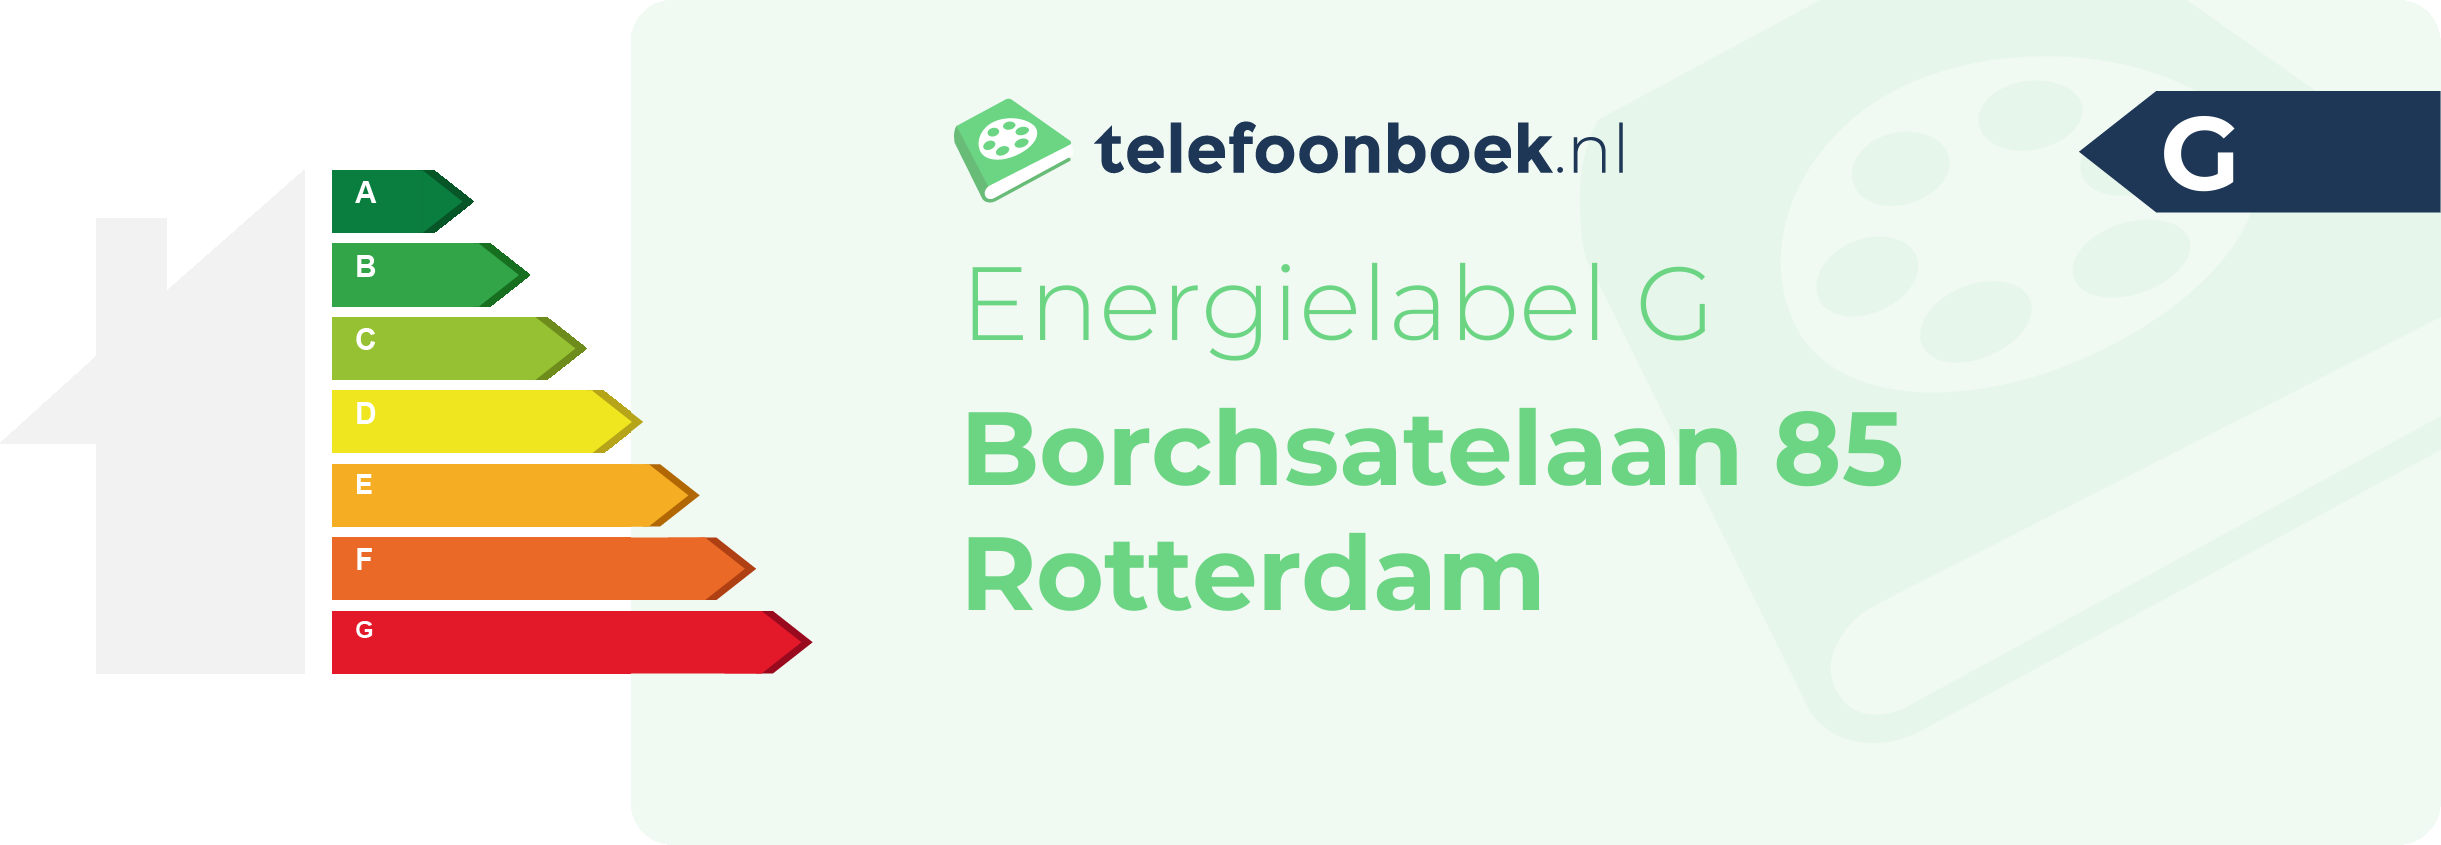 Energielabel Borchsatelaan 85 Rotterdam